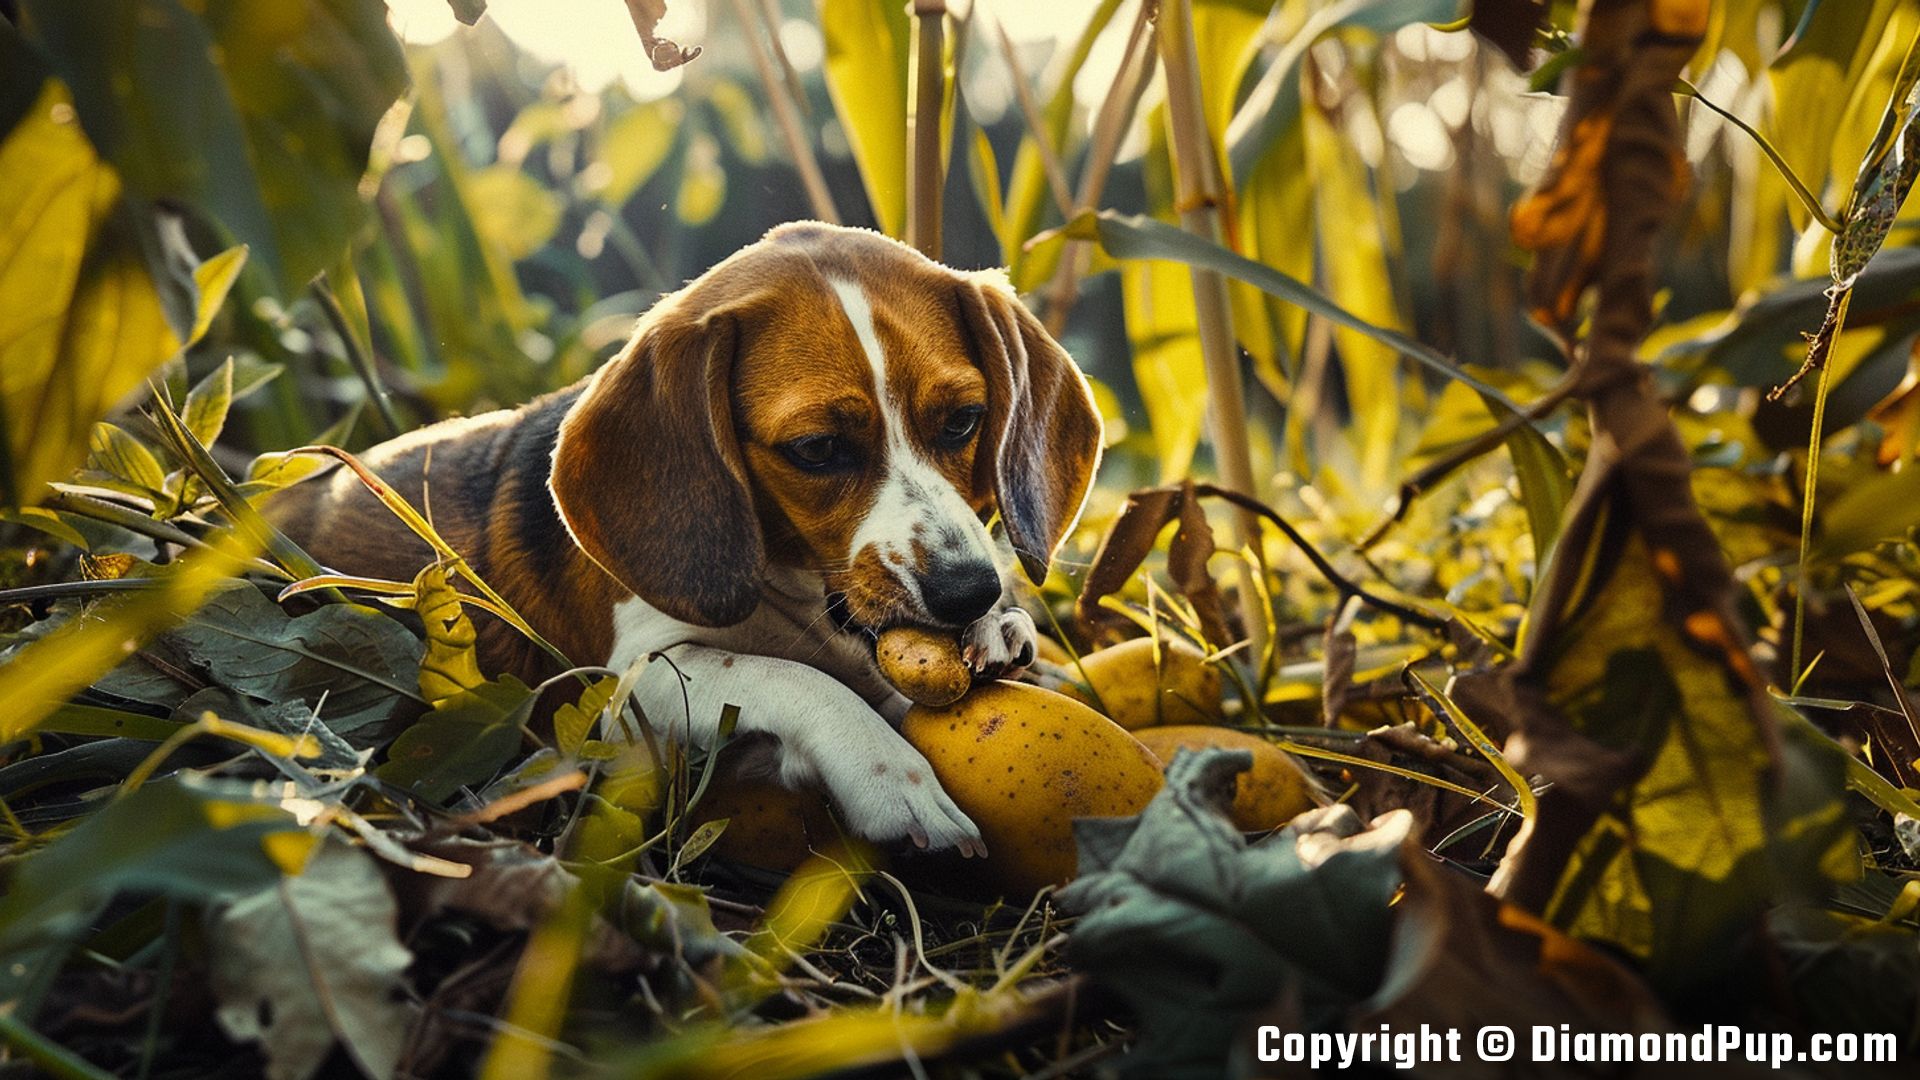 Photo of a Cute Beagle Snacking on Potato